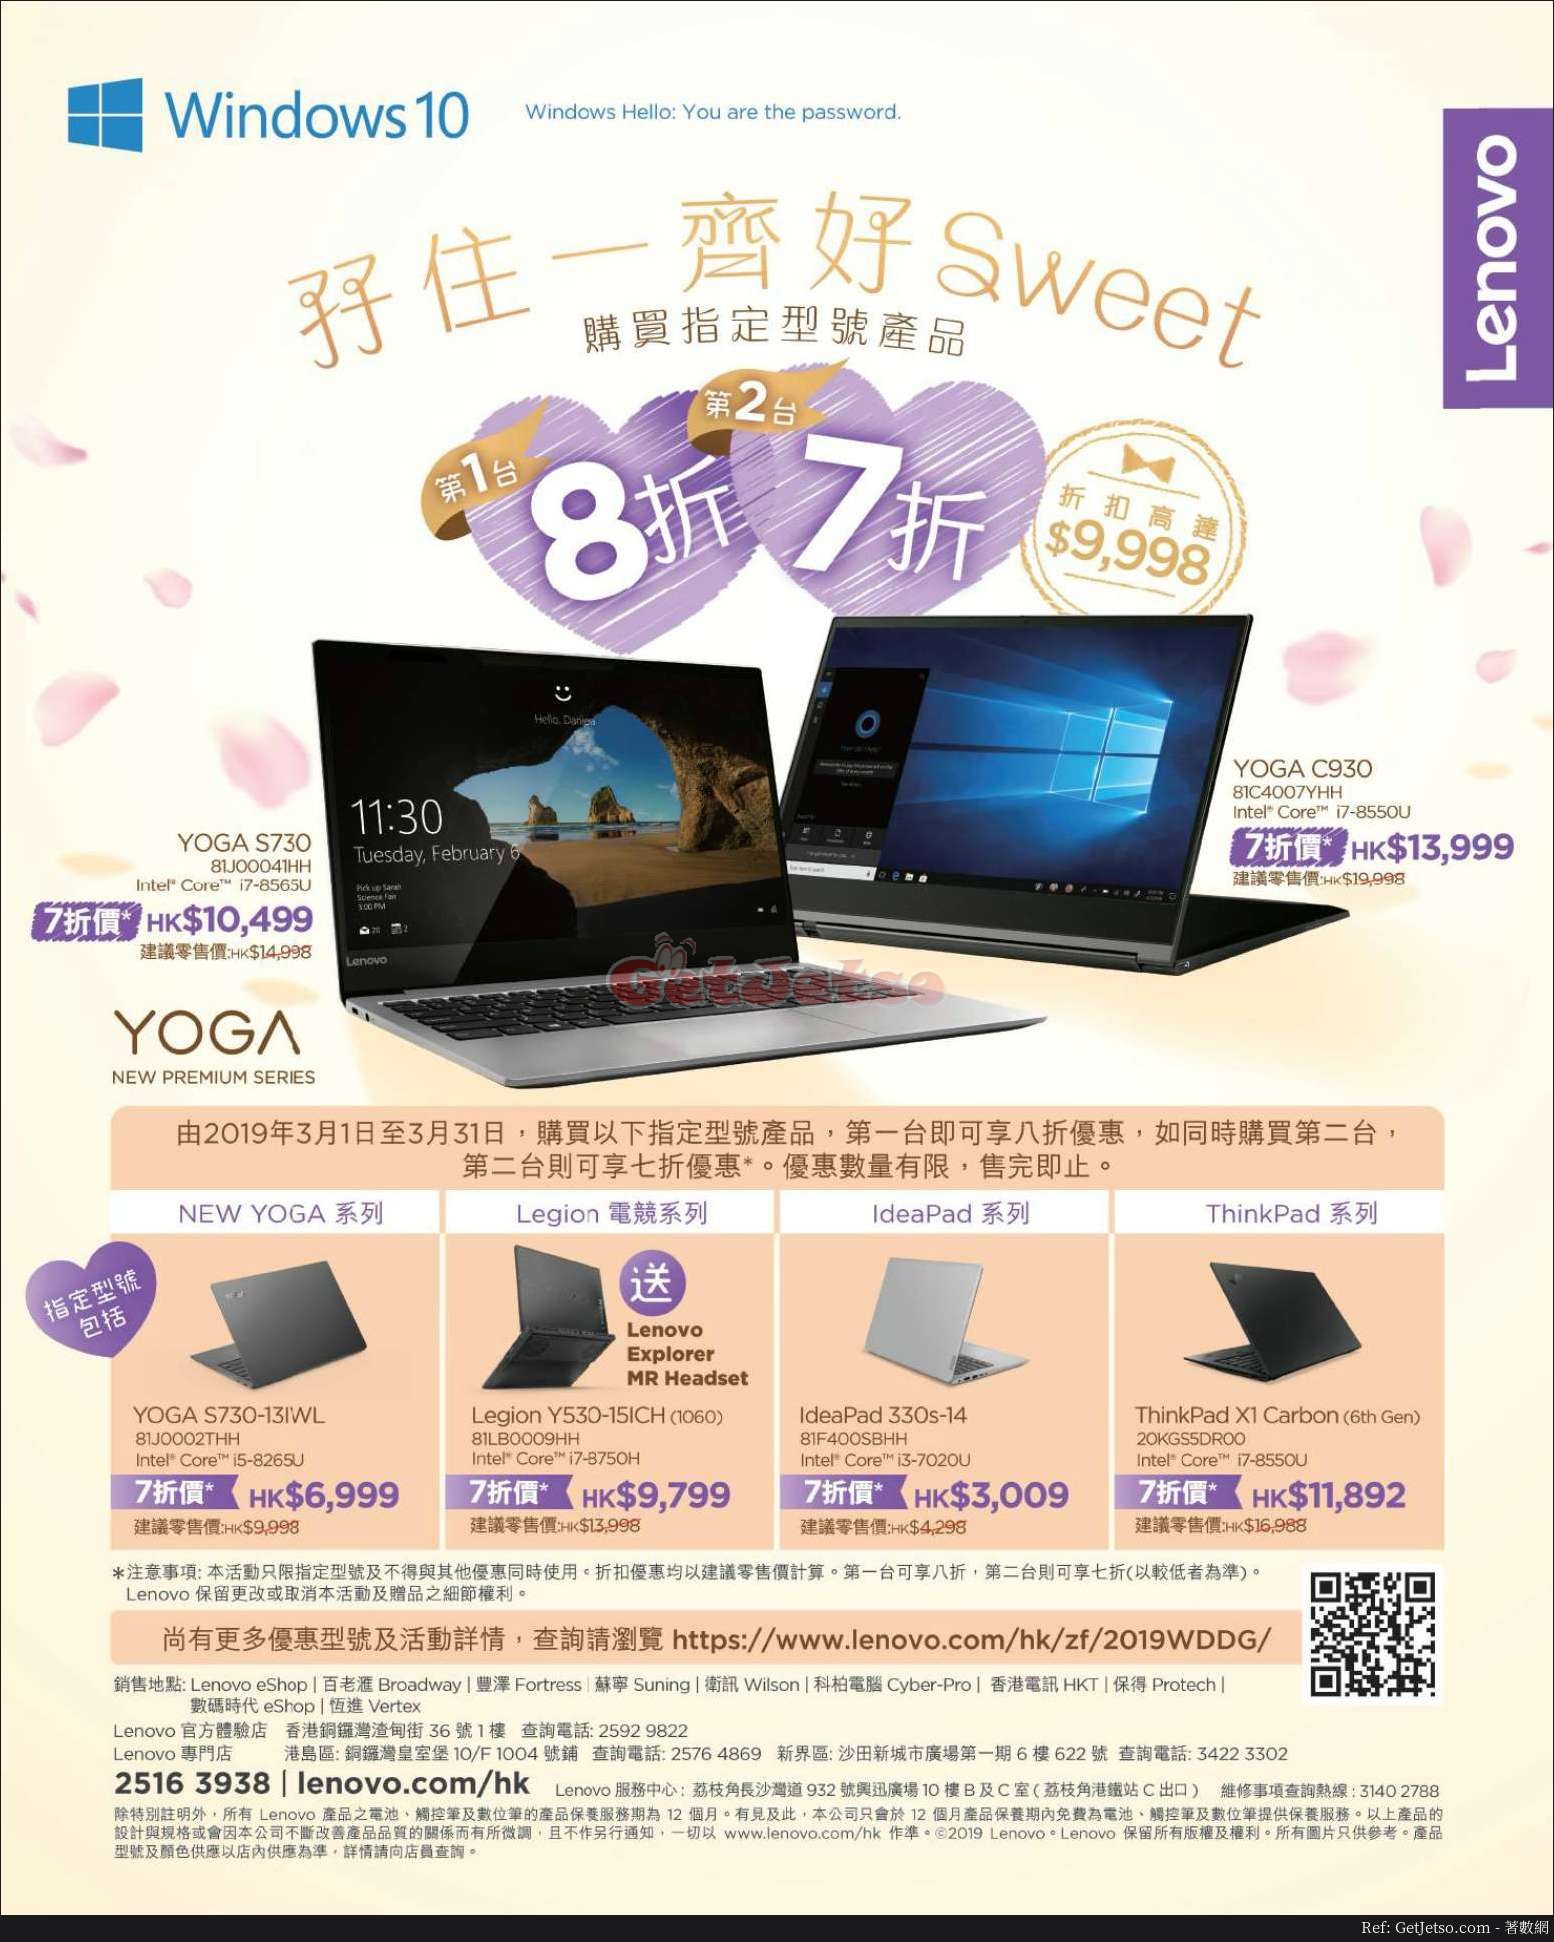 Lenovo 購買手提電腦第1台8折，第2台7折優惠(至19年3月31日)圖片1